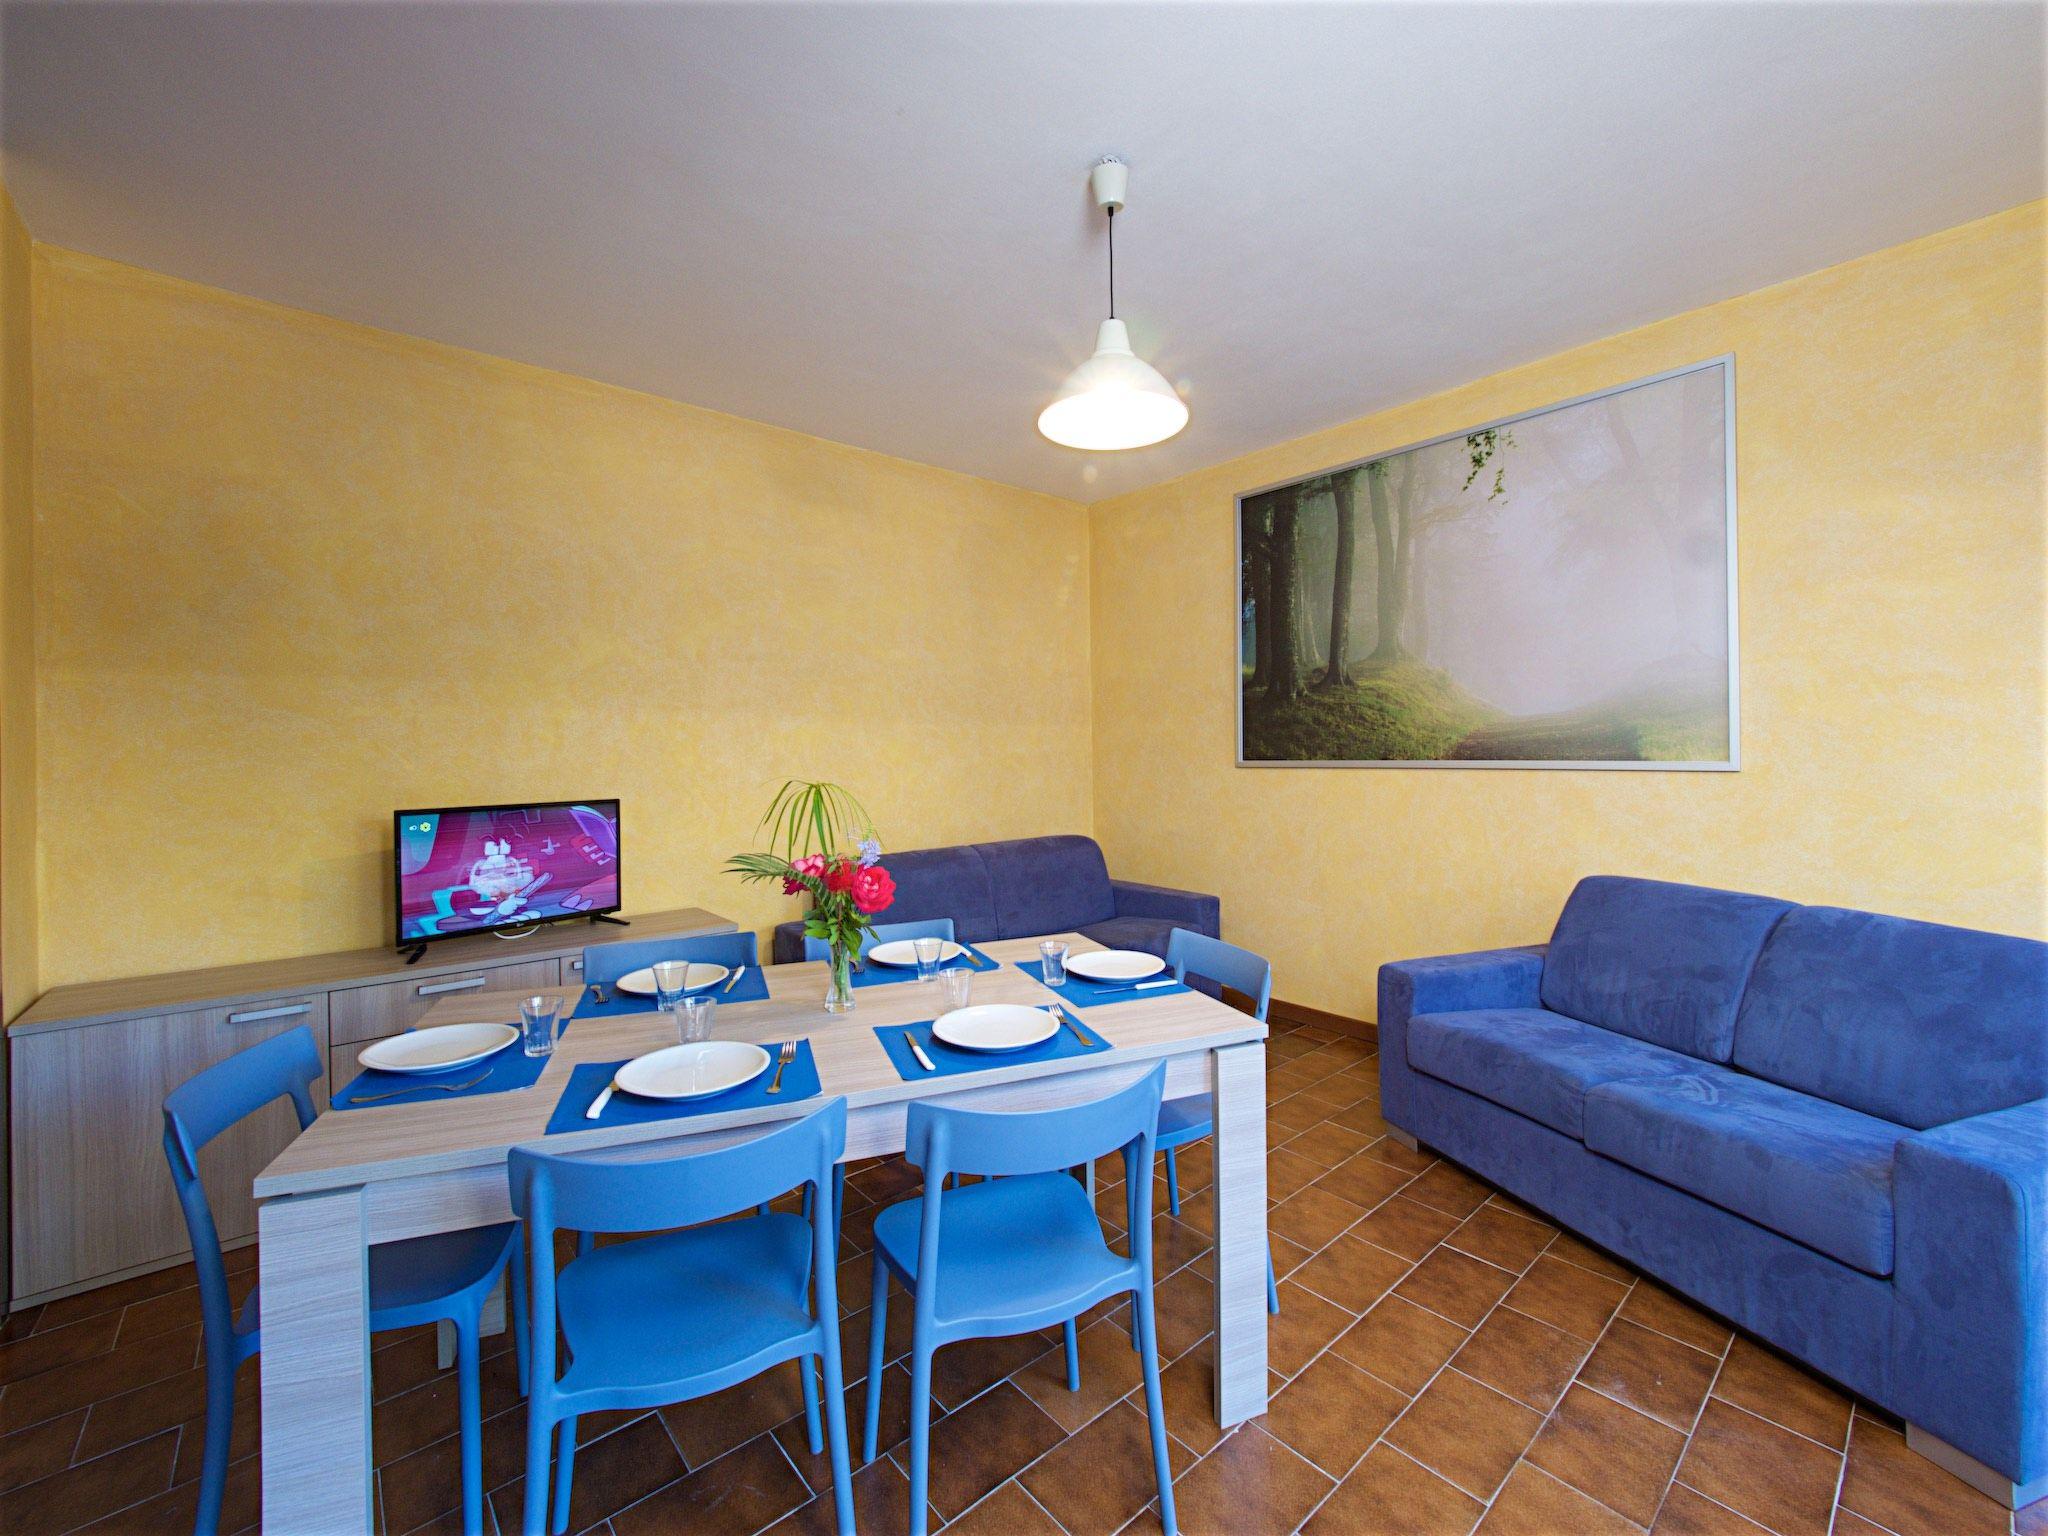 Foto 7 - Apartment mit 2 Schlafzimmern in Castiglione della Pescaia mit schwimmbad und blick aufs meer